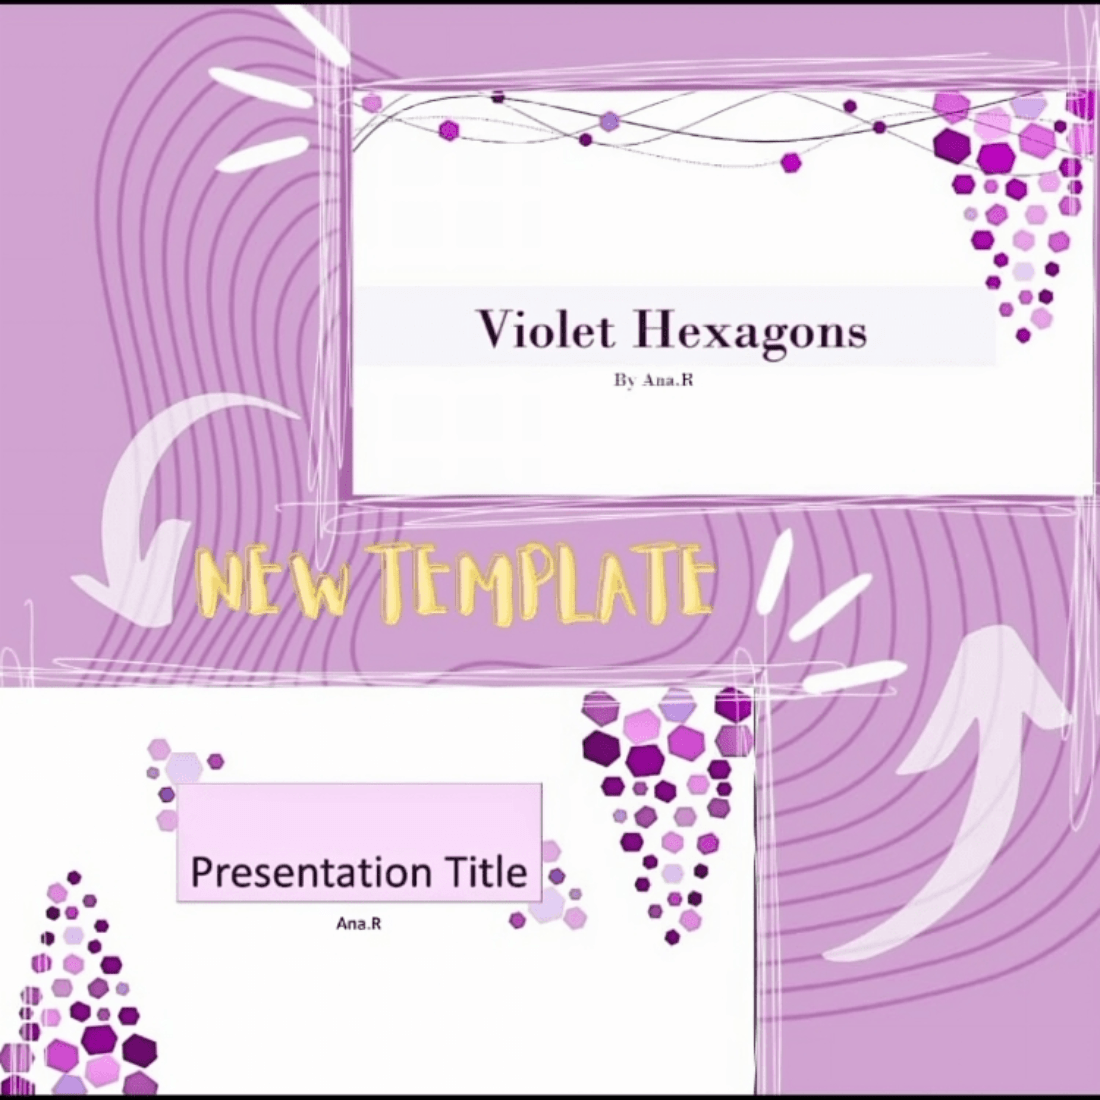 HexaViolet 2 Elegance: Bondi MT PowerPoint Template (9 Slides, 16:9) preview image.